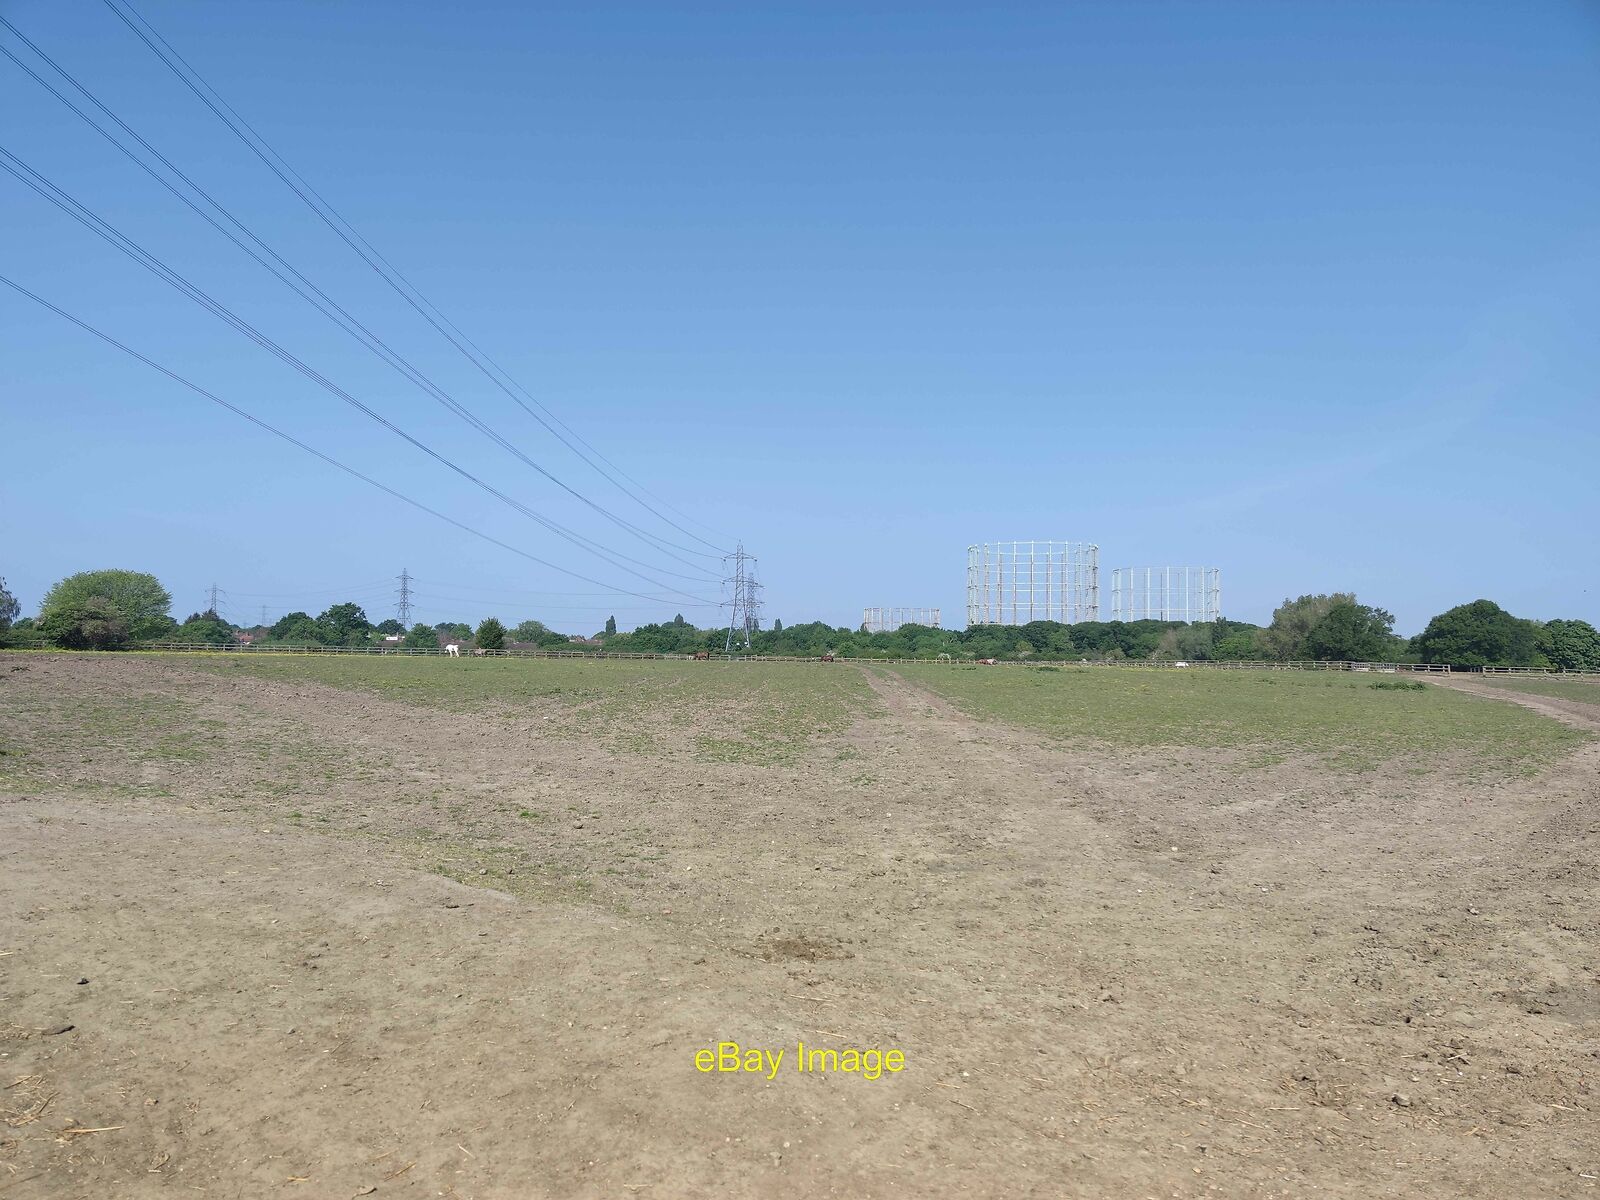 Photo 6x4 Fields near Green Land Nursery School New Malden Empty Gas Hold c2020